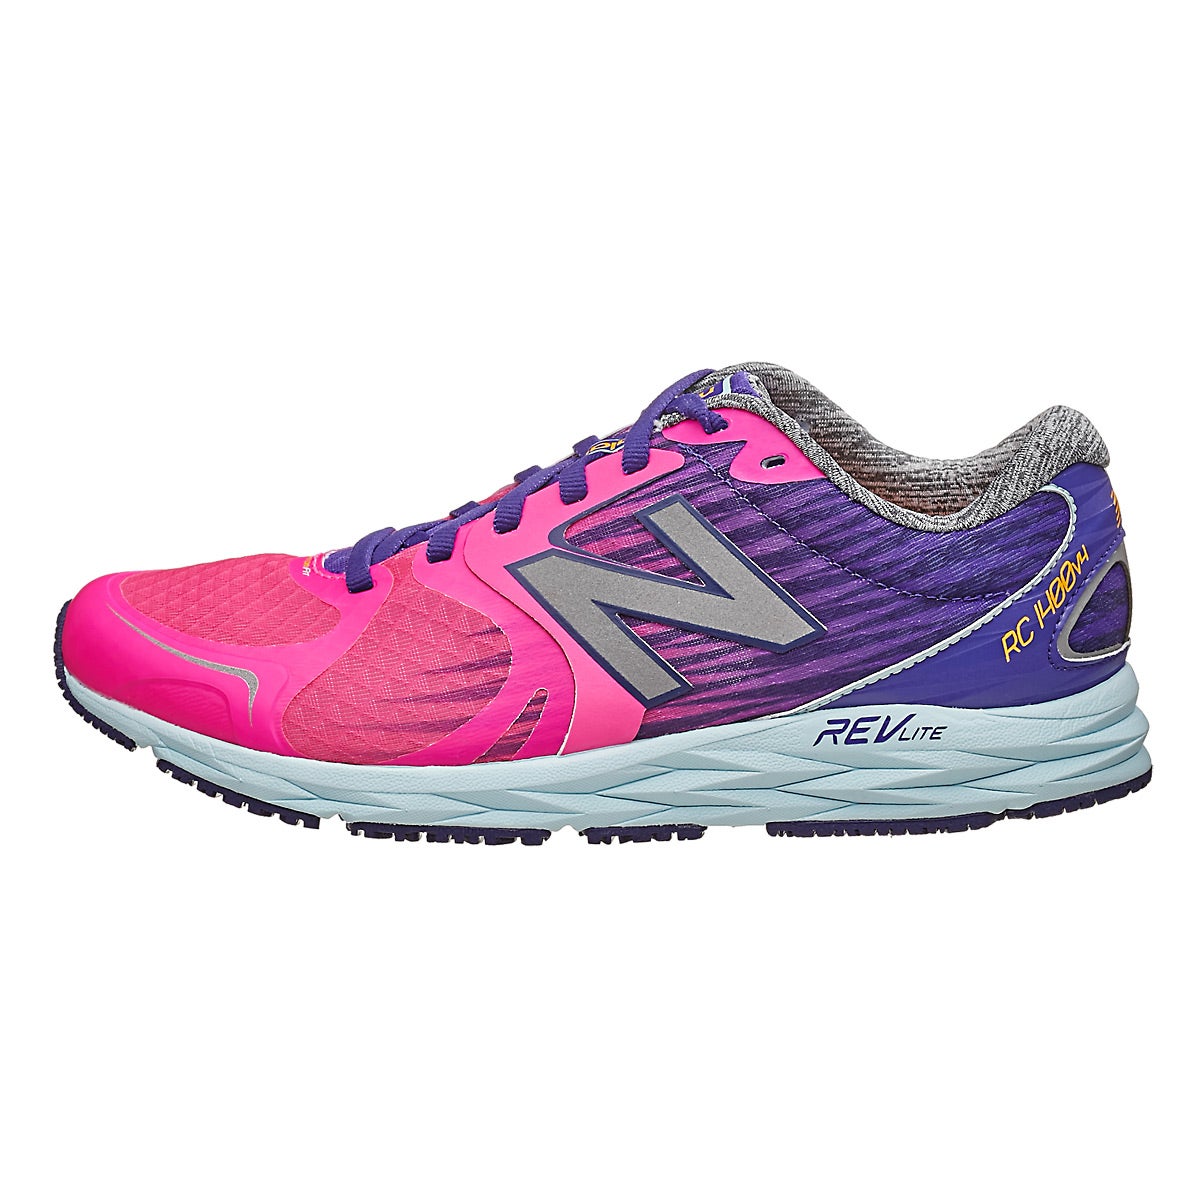 New Balance RC1400 v4 Women's Shoes Purple/Blue 360° View | Running ...